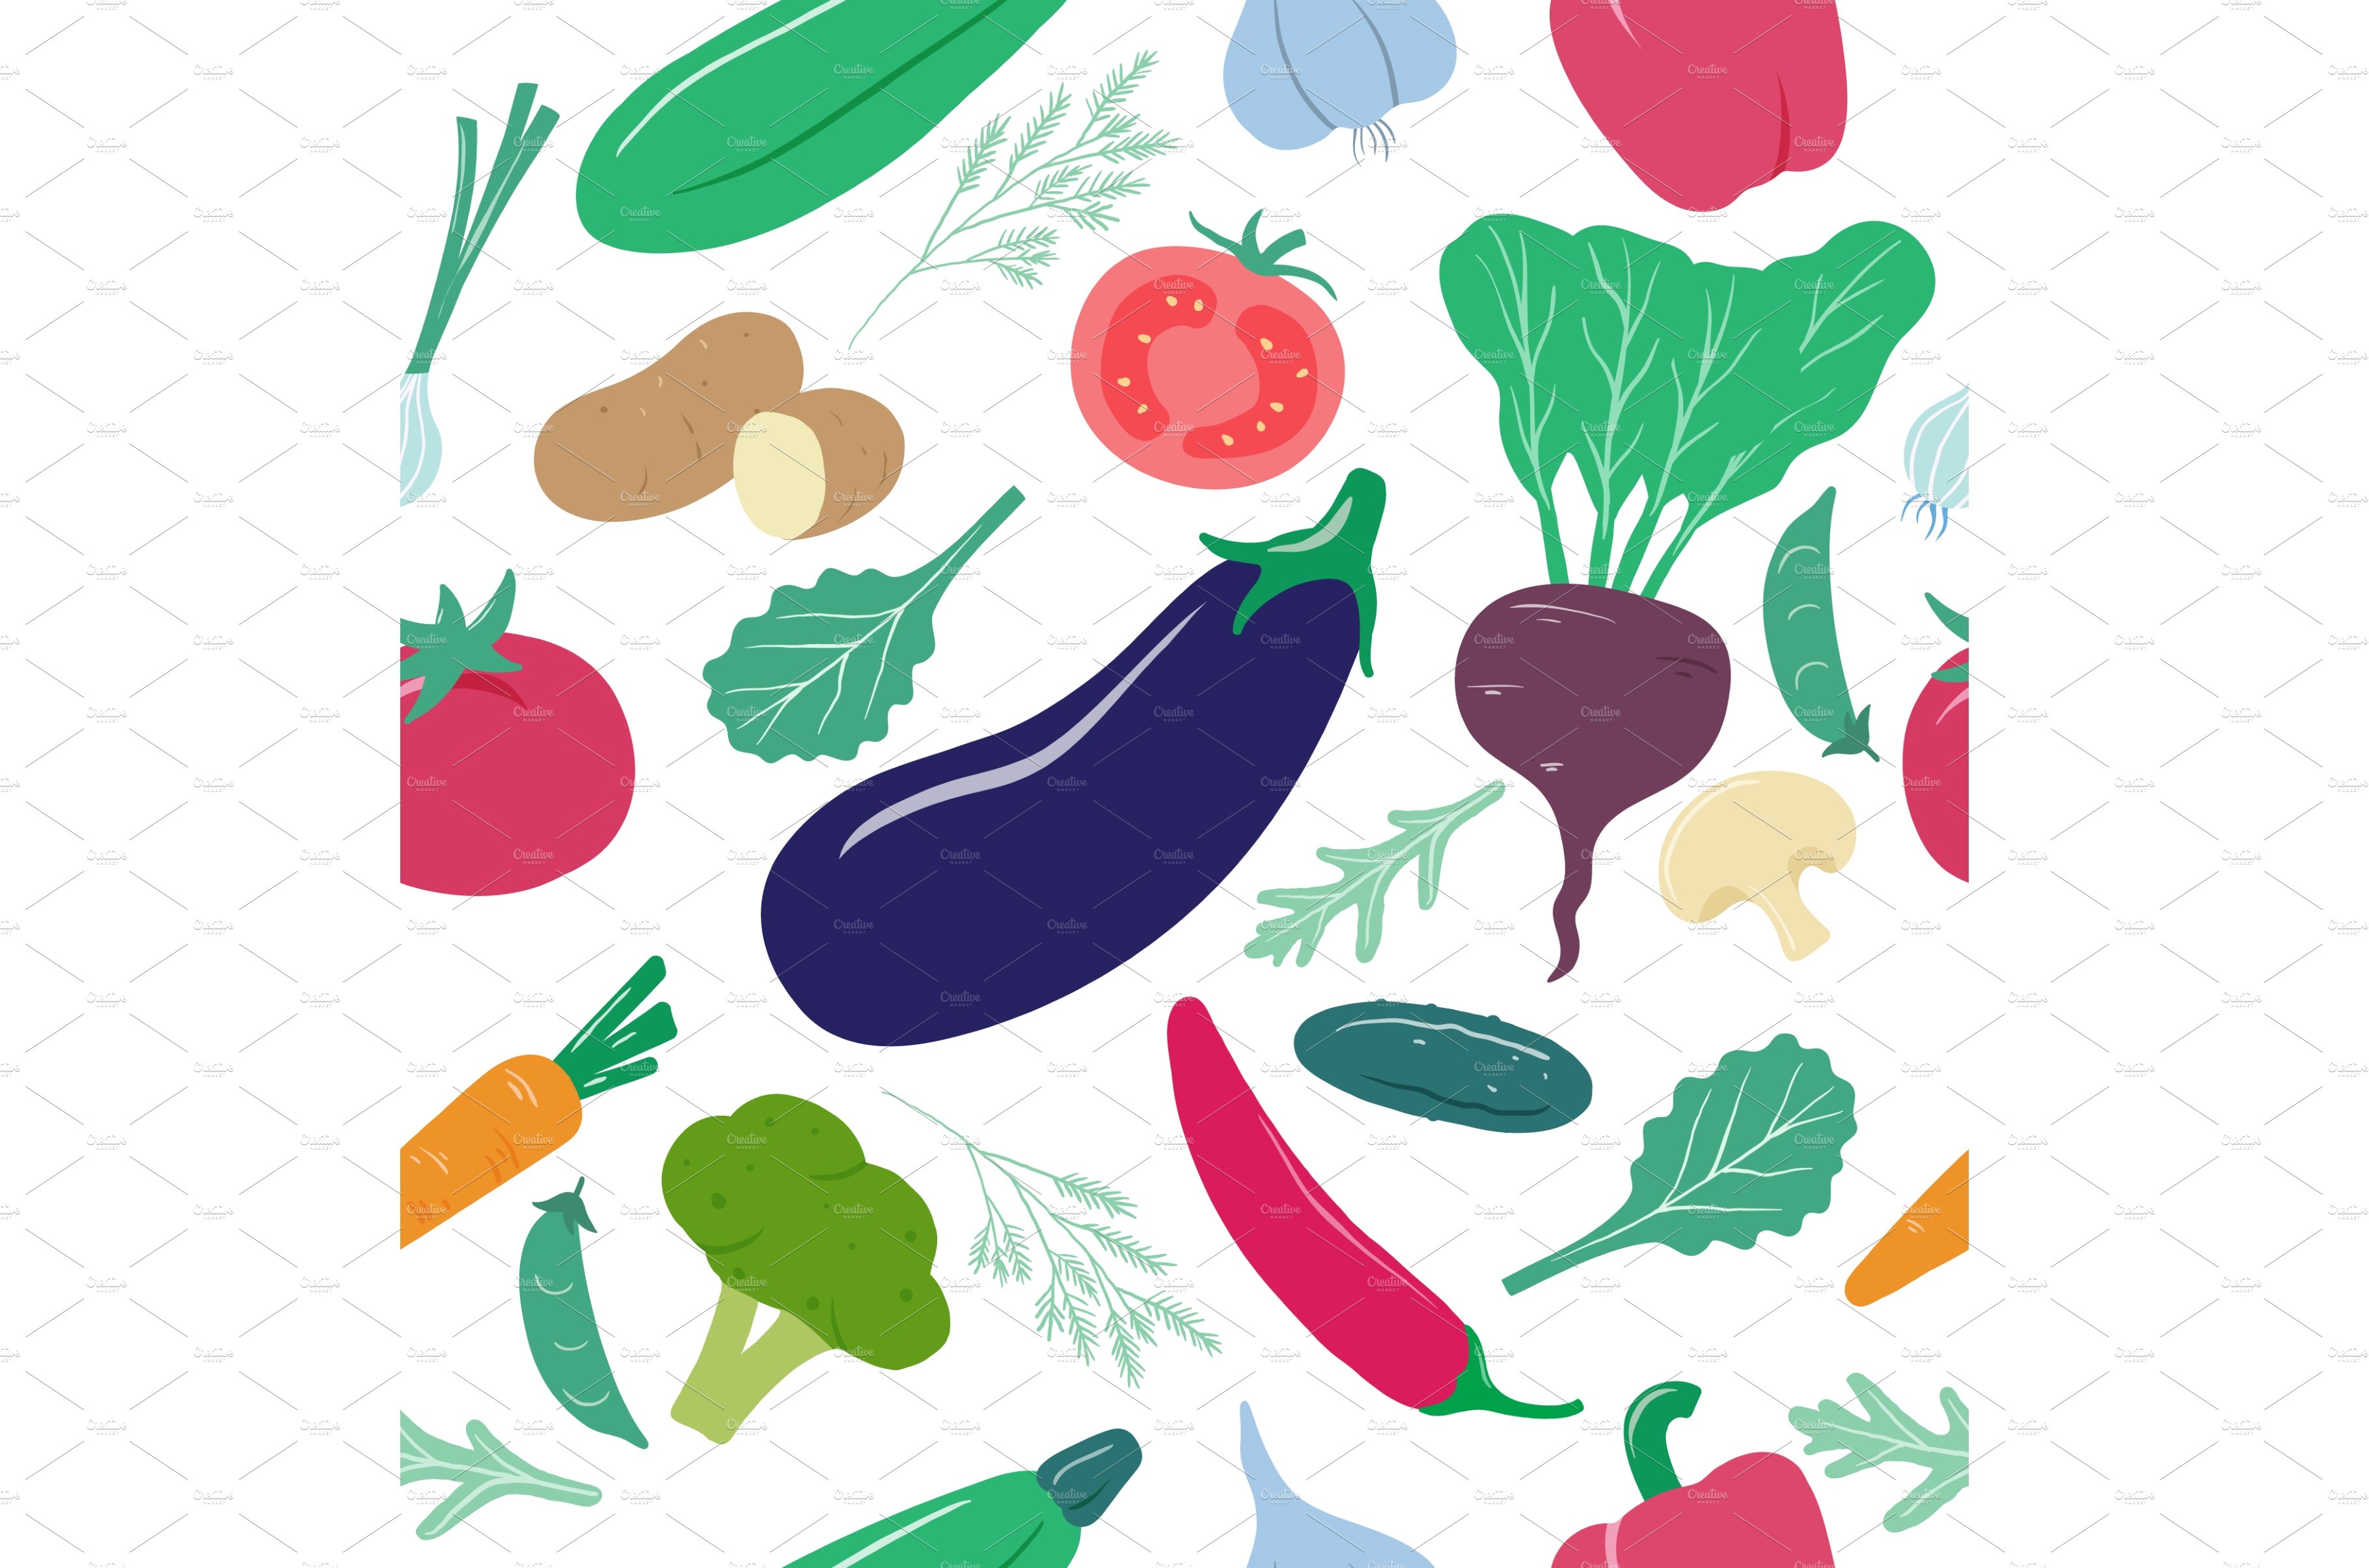 Vegetables pattern. Vegan organic cover image.